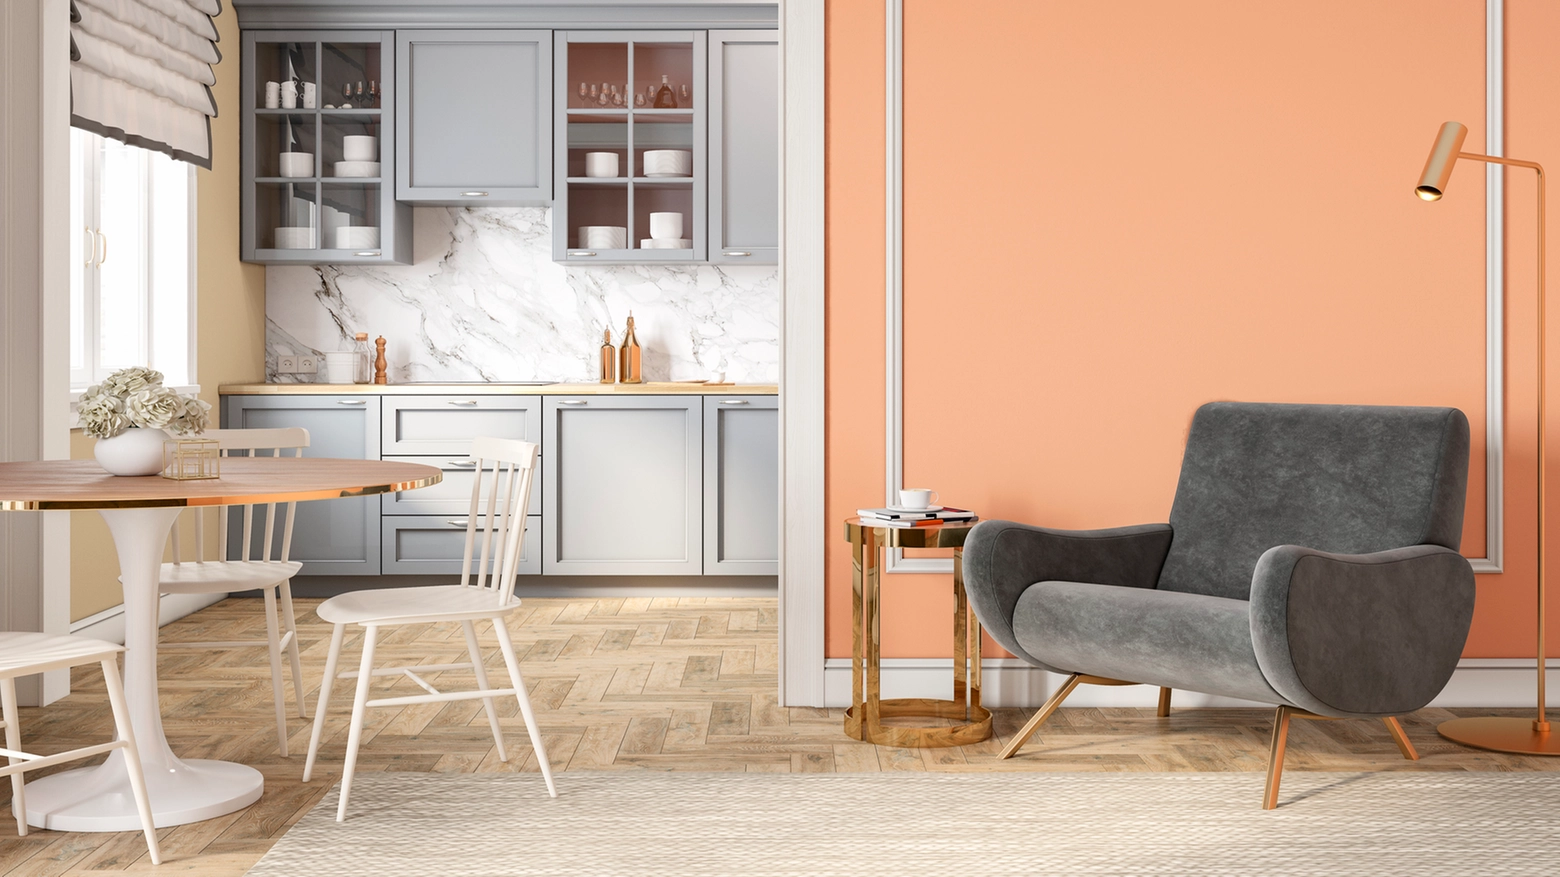 Peach Fuzz interior design (iStock Photo)